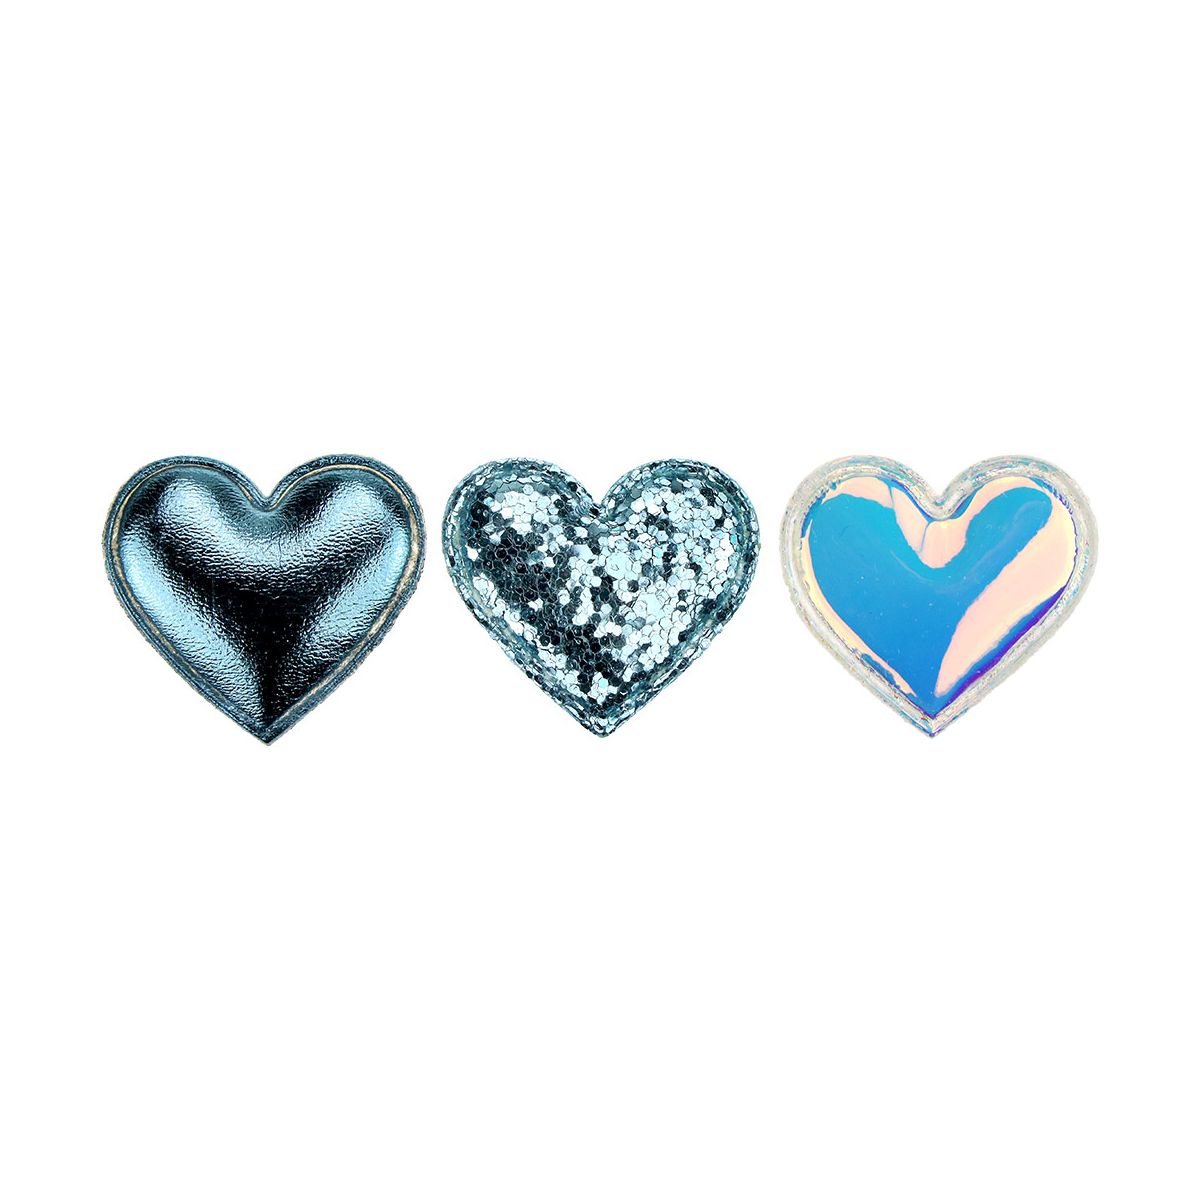 Ozdoba materiałowa Titanum Craft-Fun Series serca samoprzylepne (2324050-light blue)